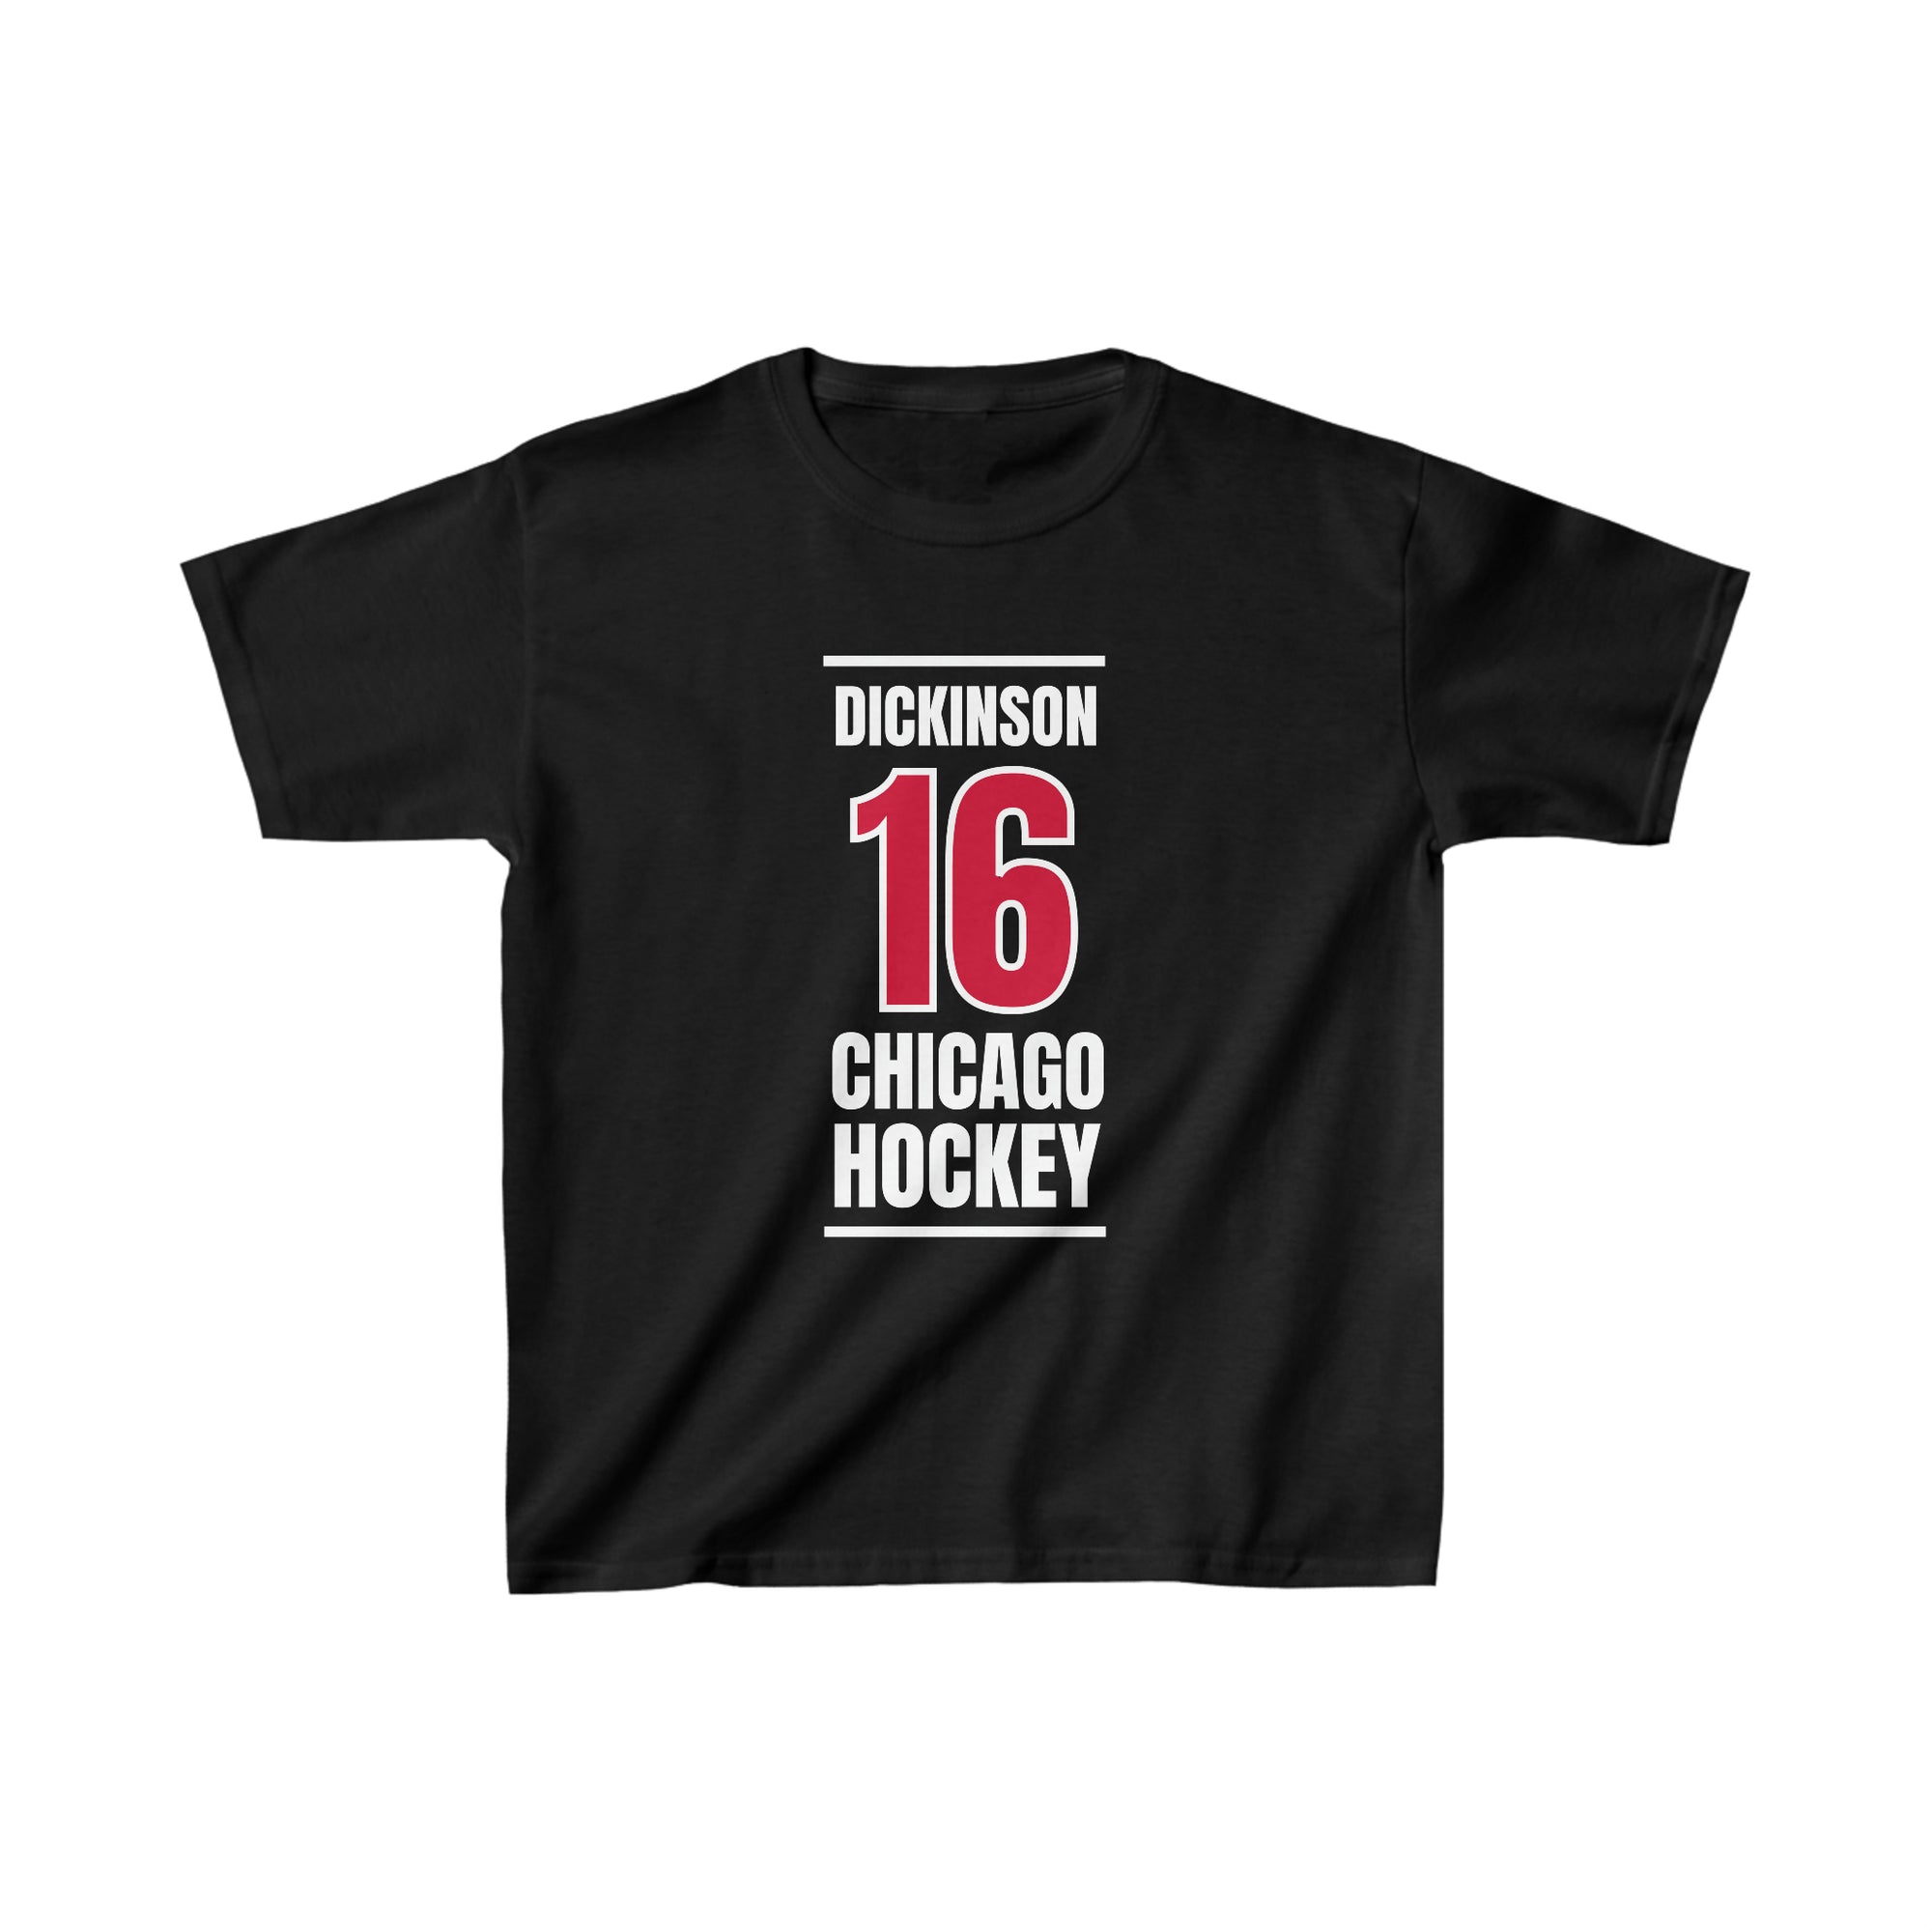 Dickinson 16 Chicago Hockey Red Vertical Design Kids Tee